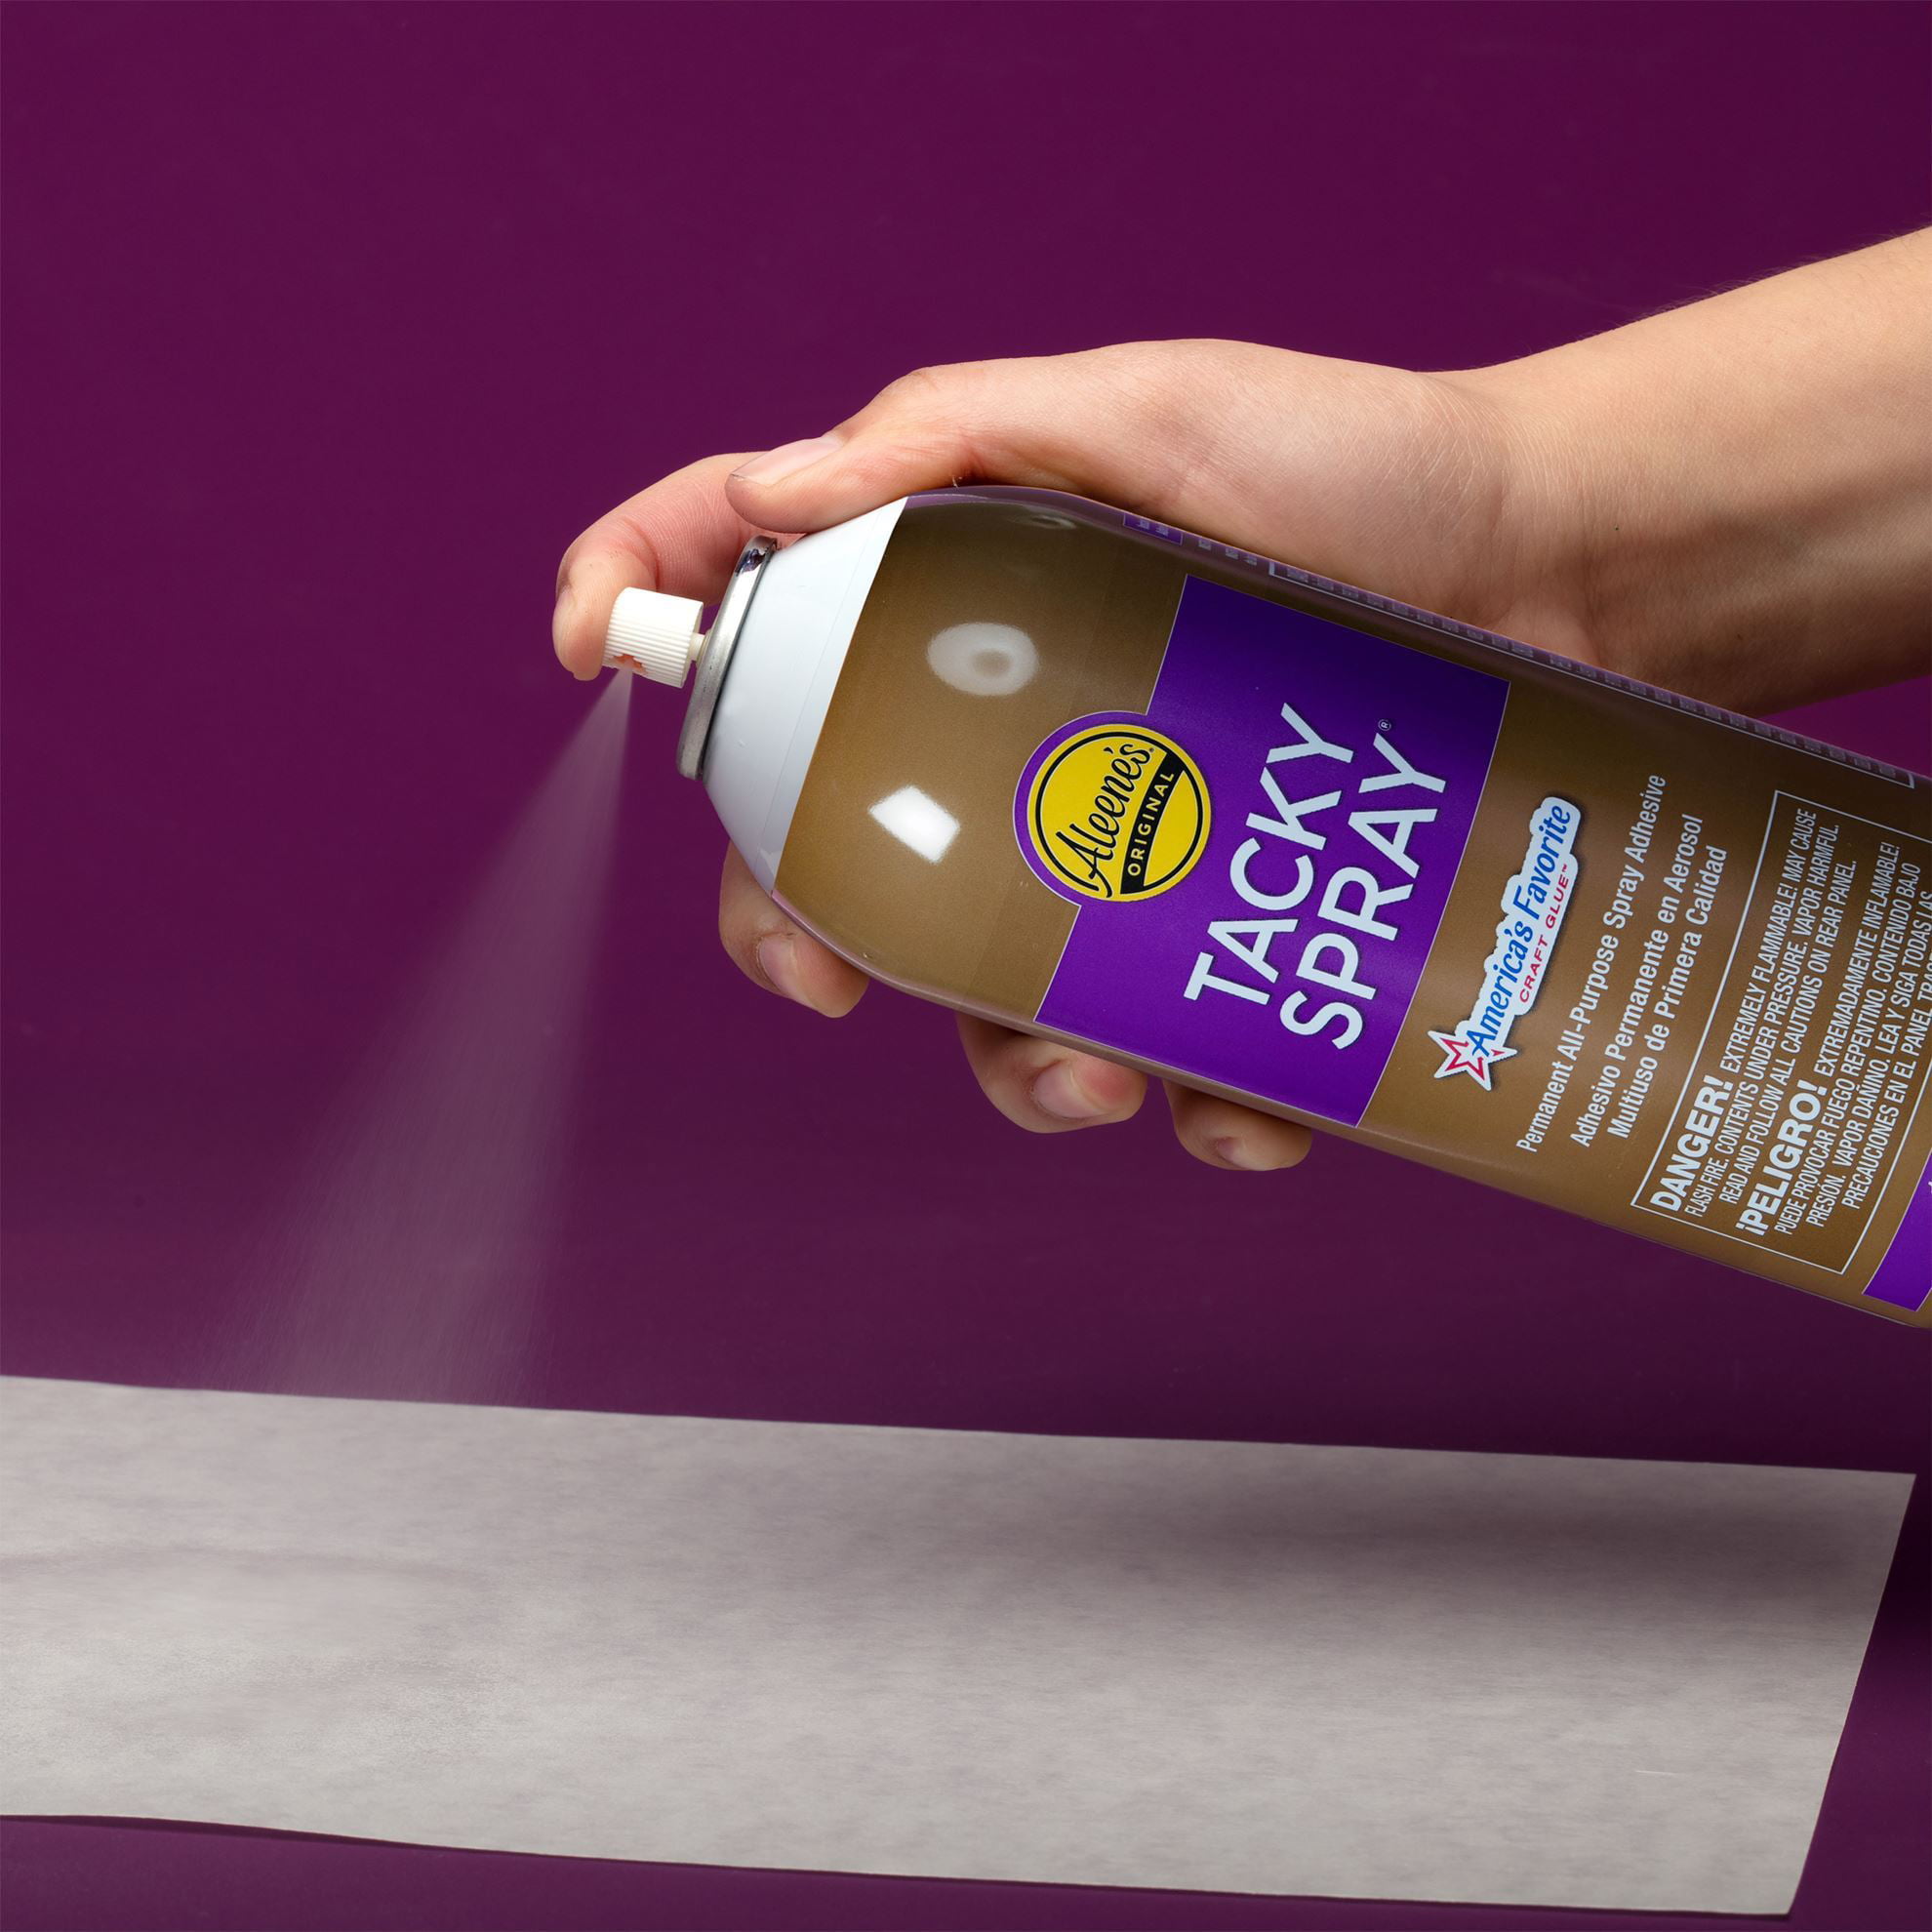 Aleene's Tacky Spray 11 oz, Clear Permanent All-Purpose Spray Adhesive